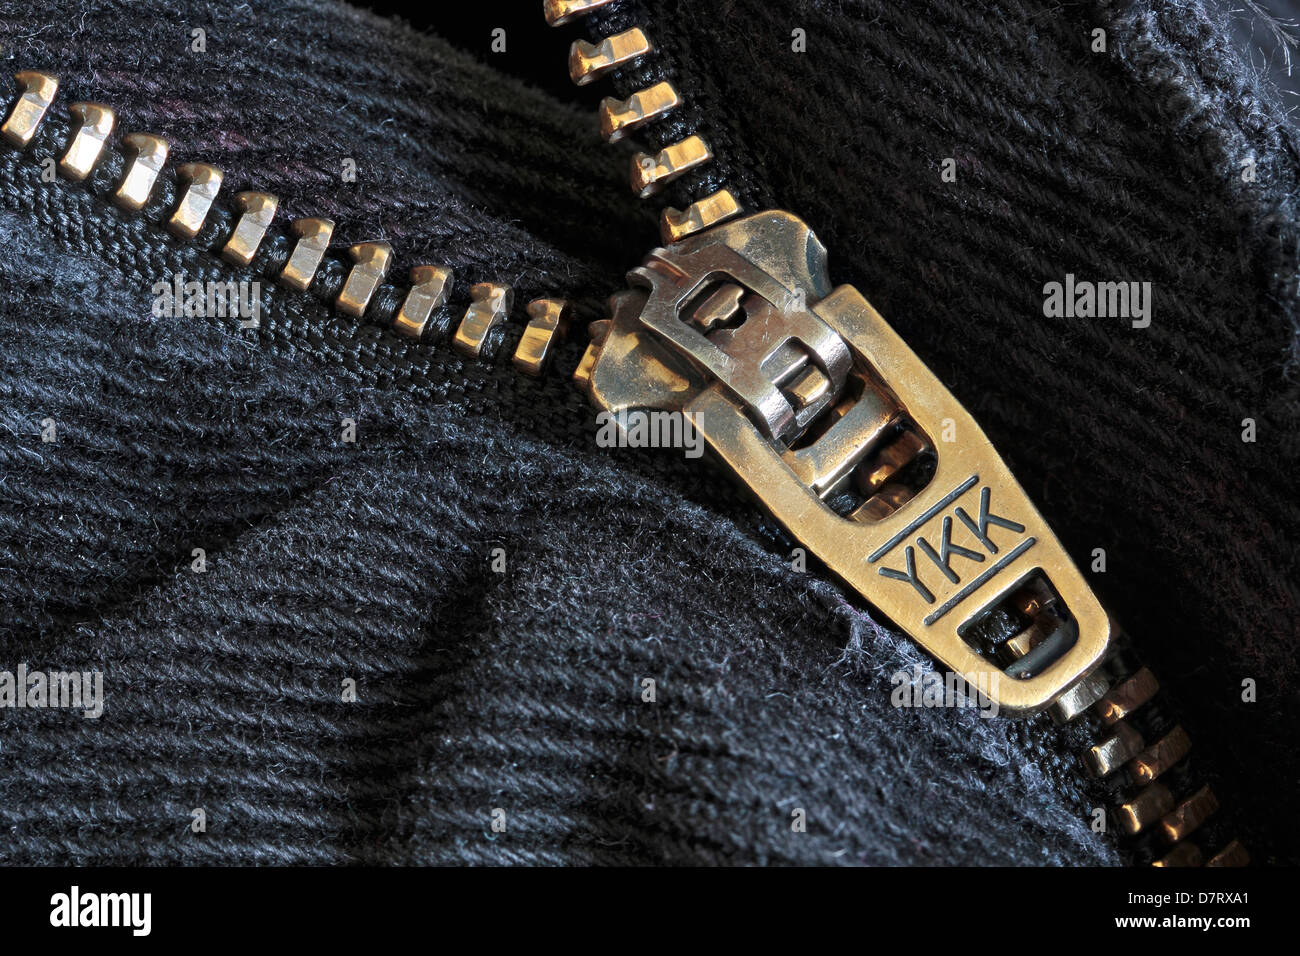 YKK Zip in black denim jeans Stock Photo